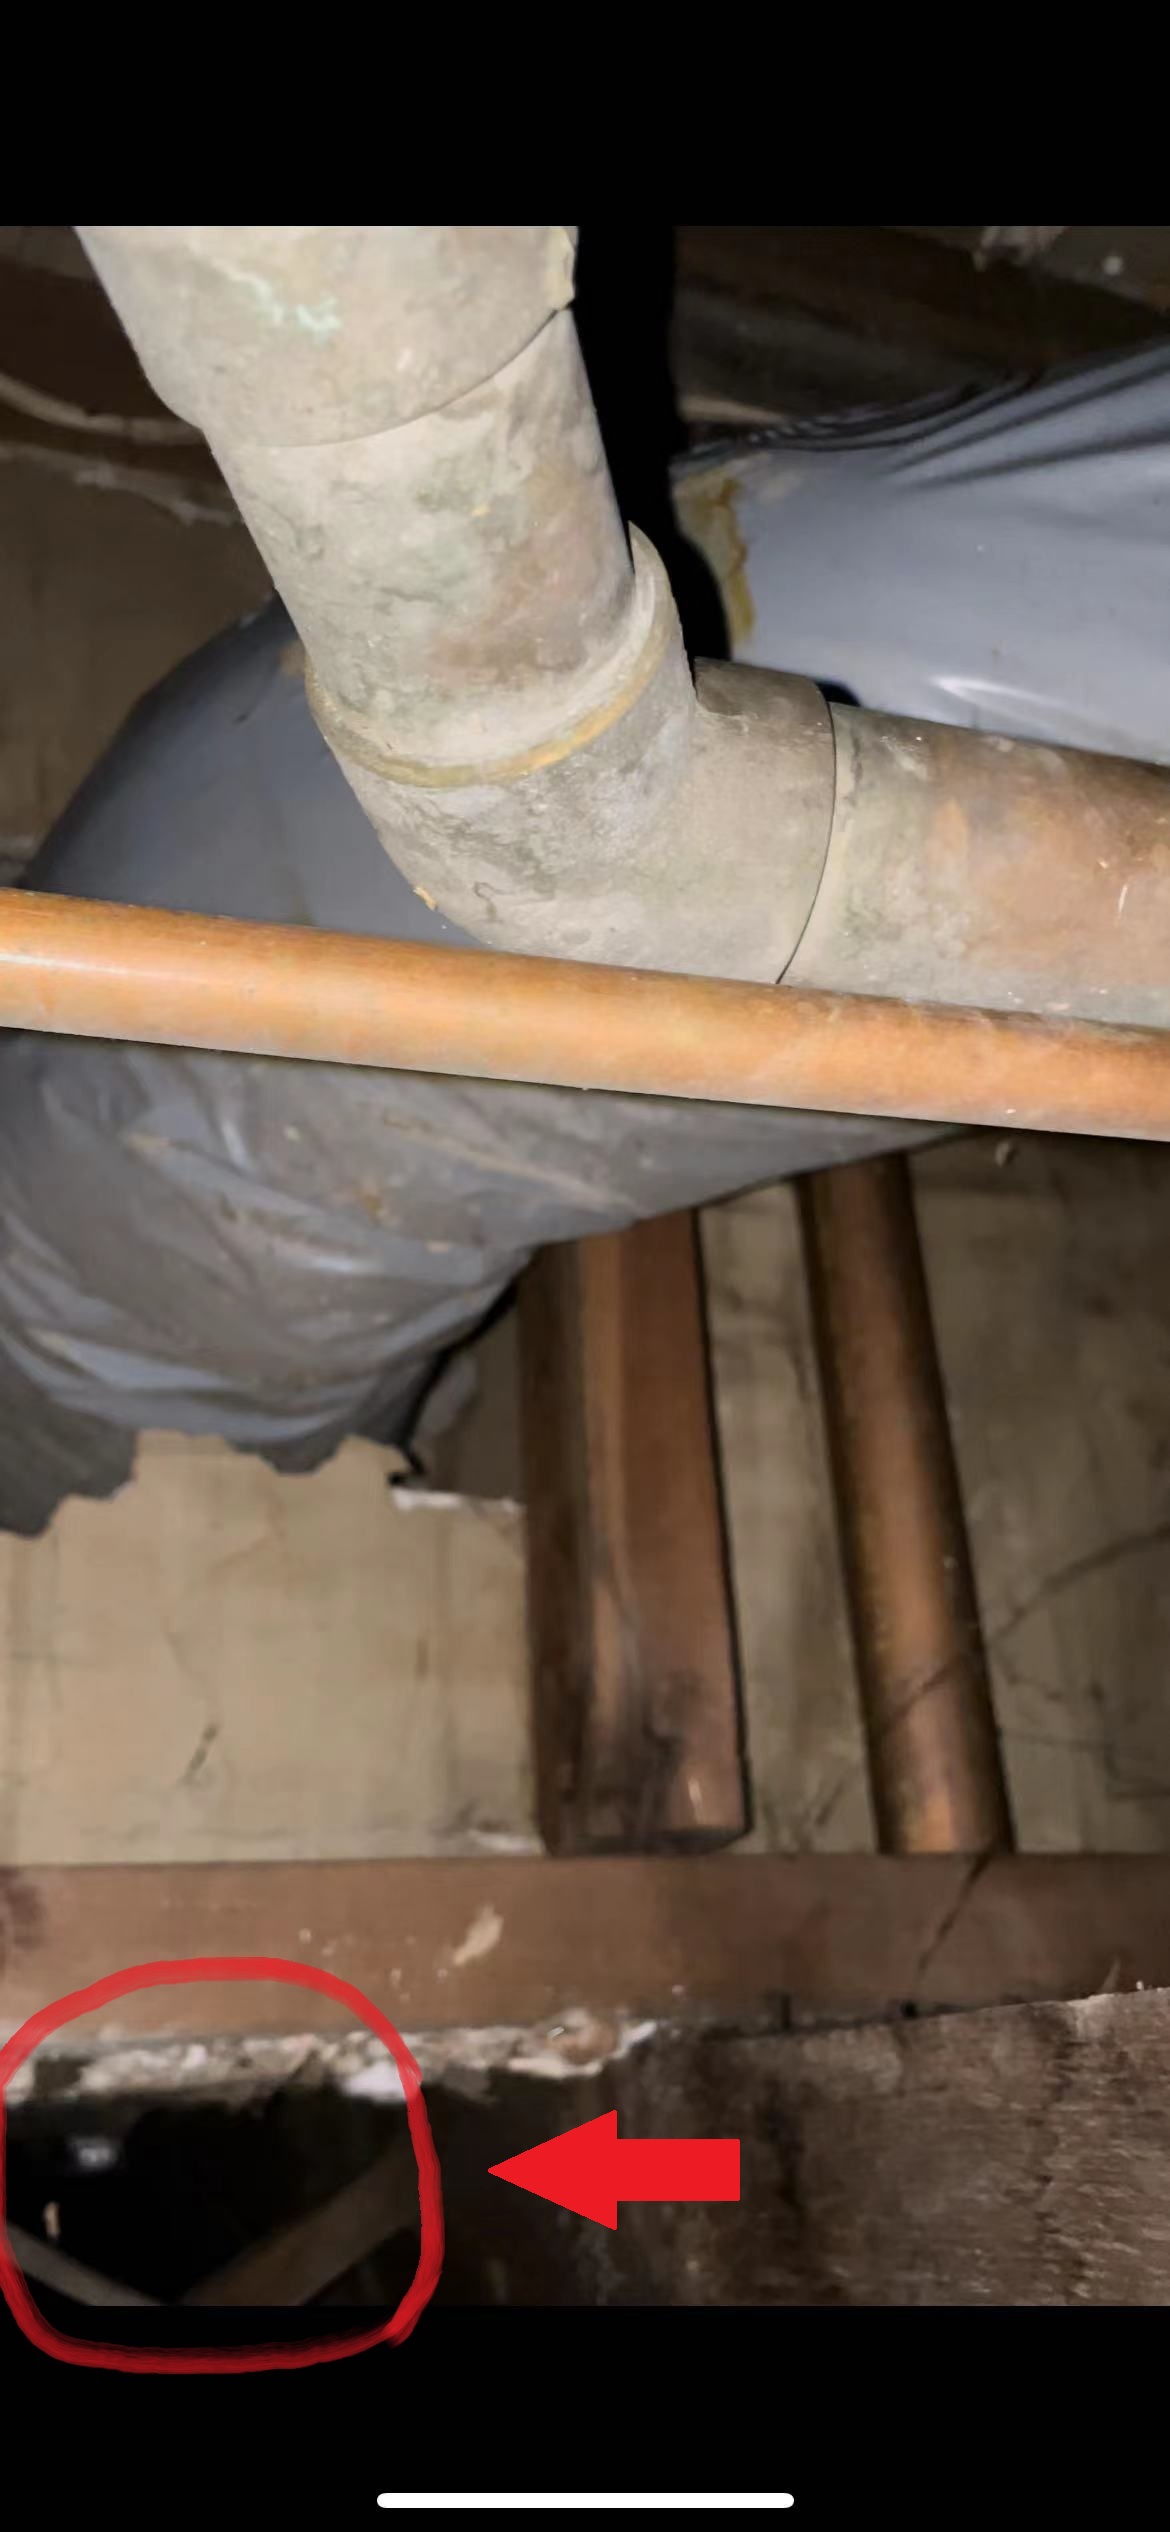 air ducts and cat hiding under bathtub.jpg